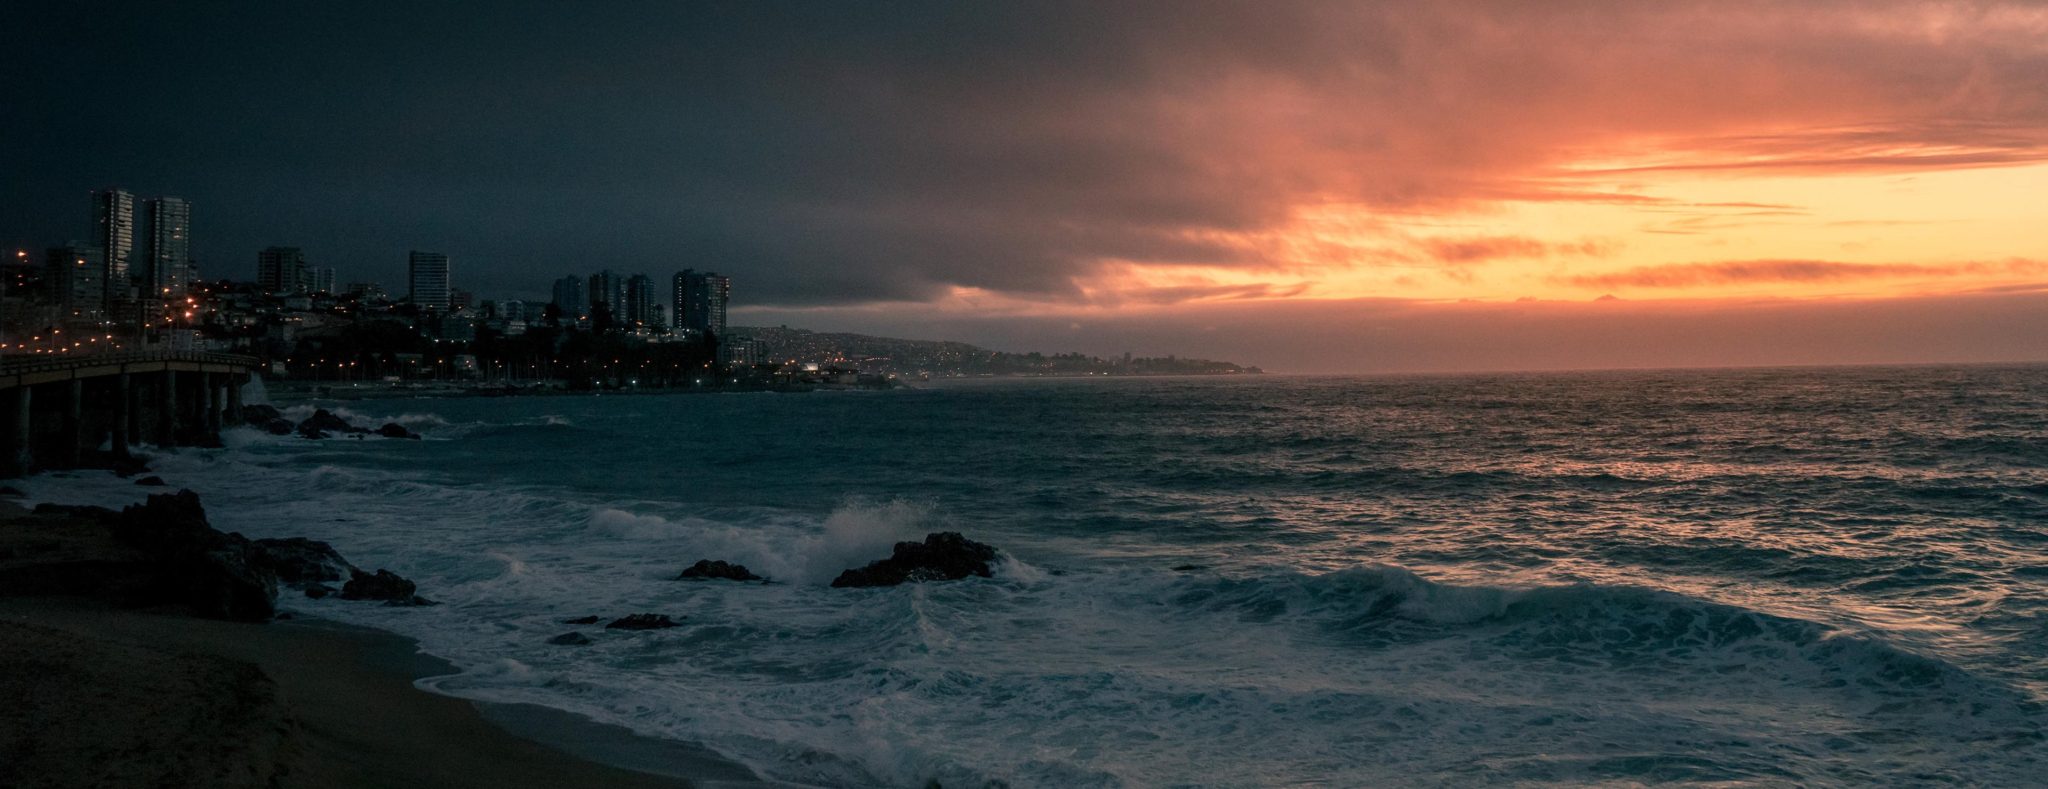 Viña del mar, Valparaíso, Chili